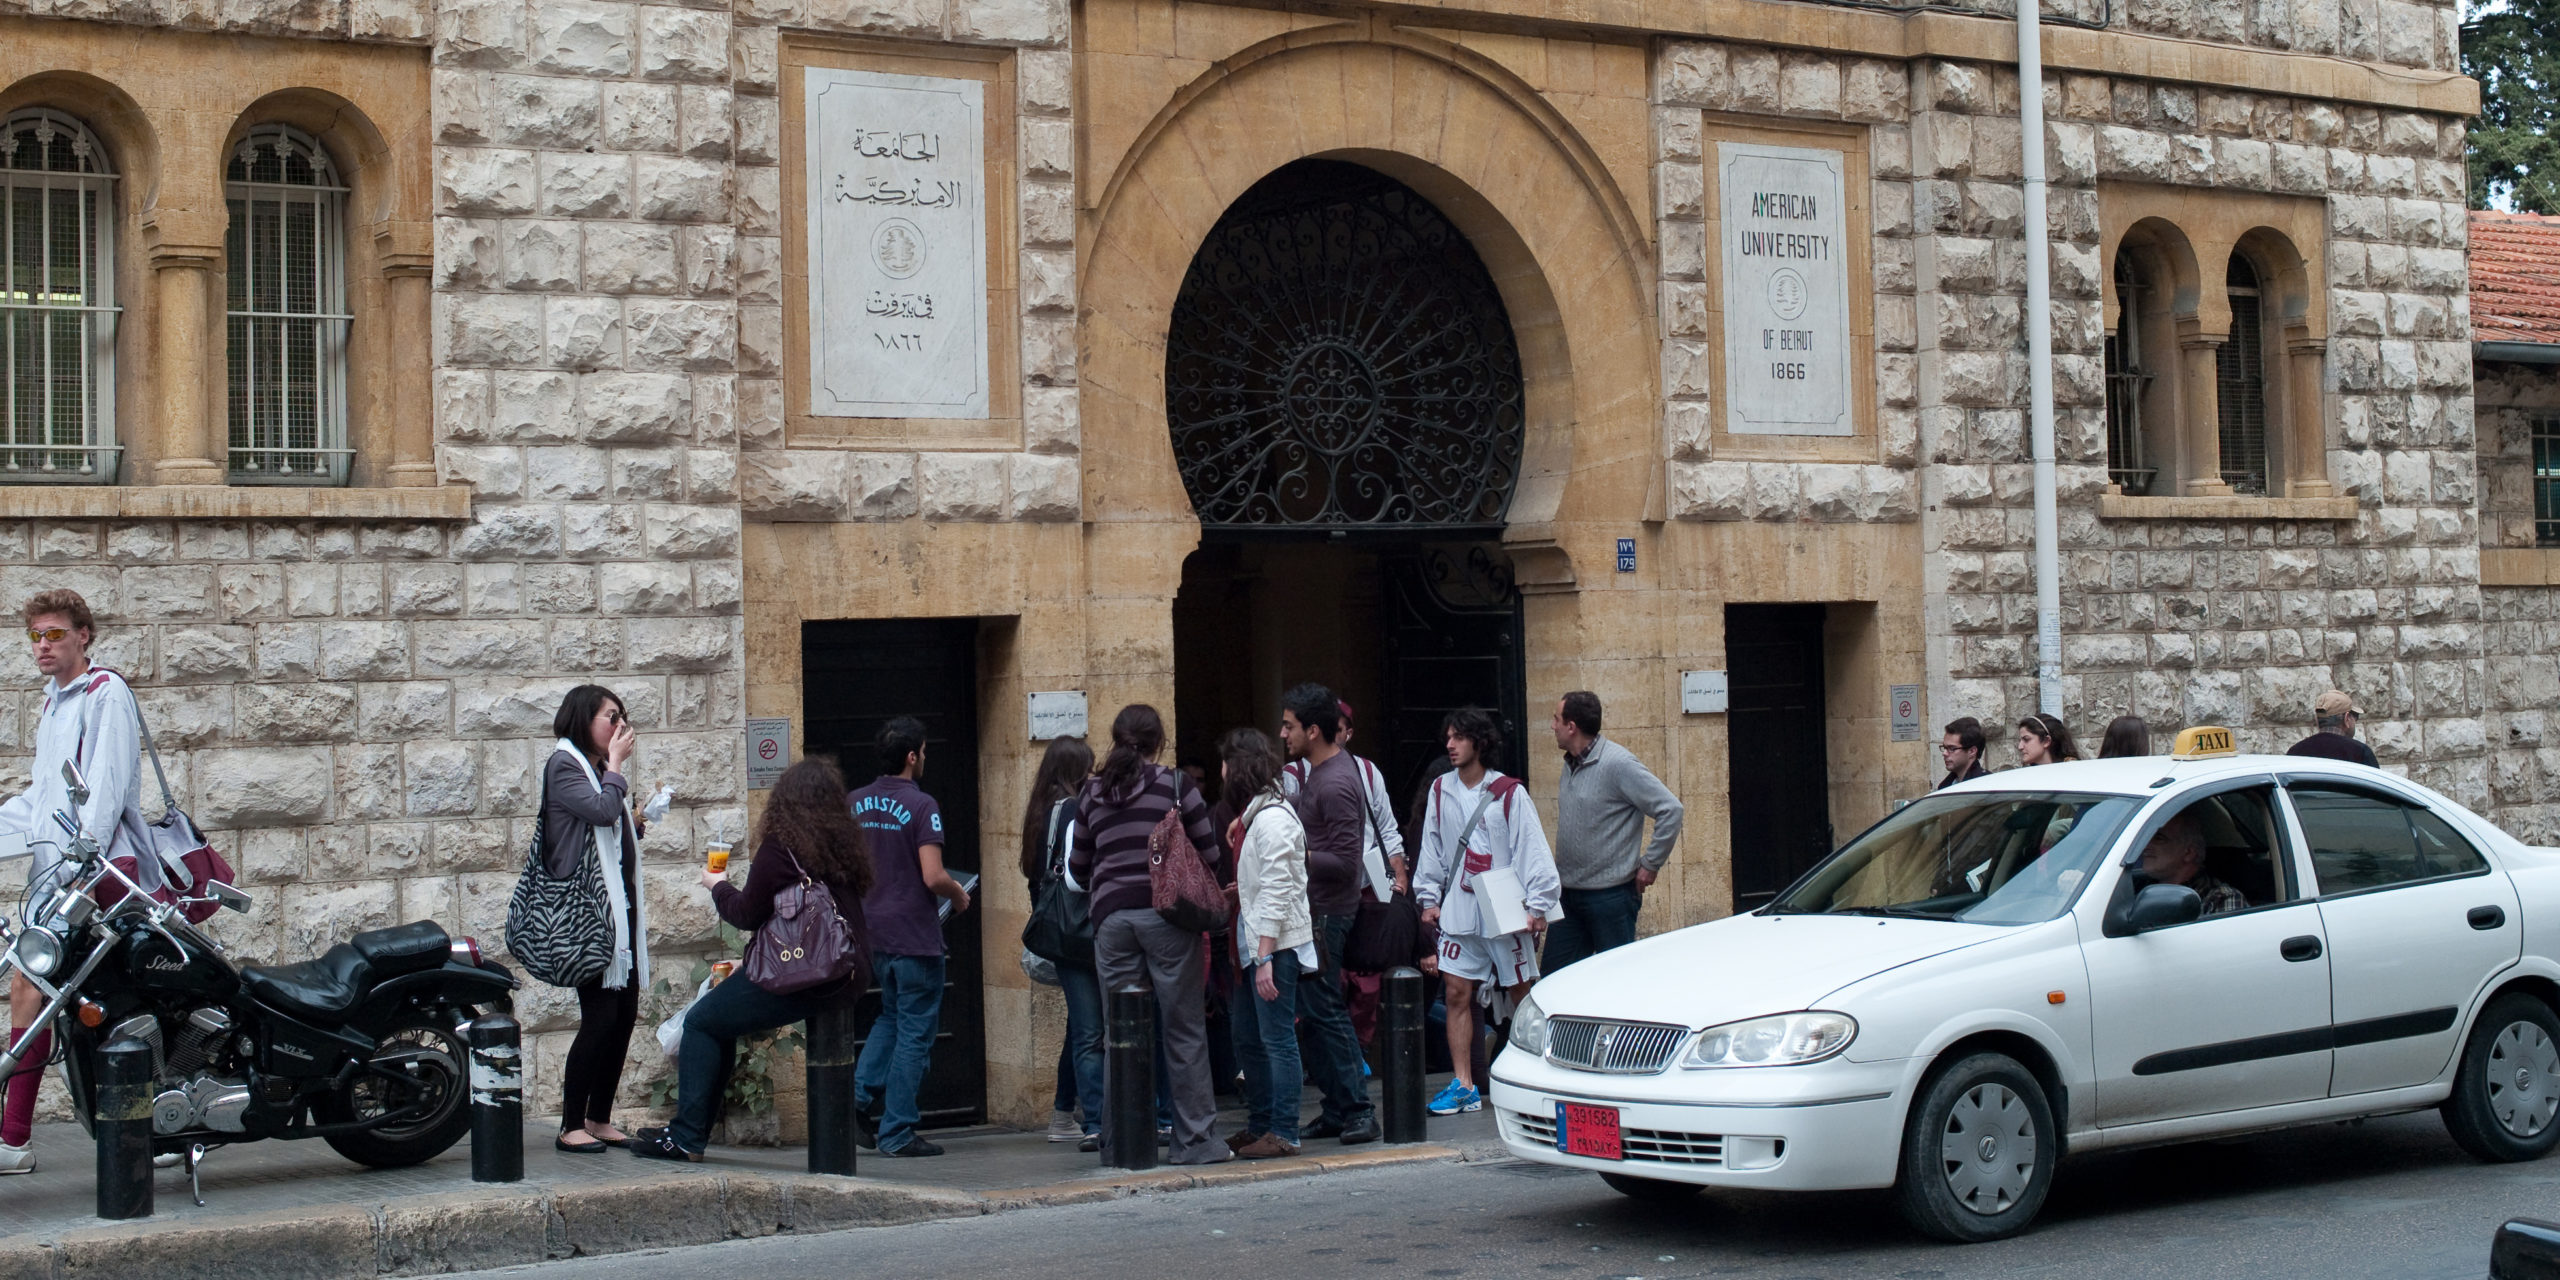 FROM THE FIELD: Inside Lebanon’s brain drain